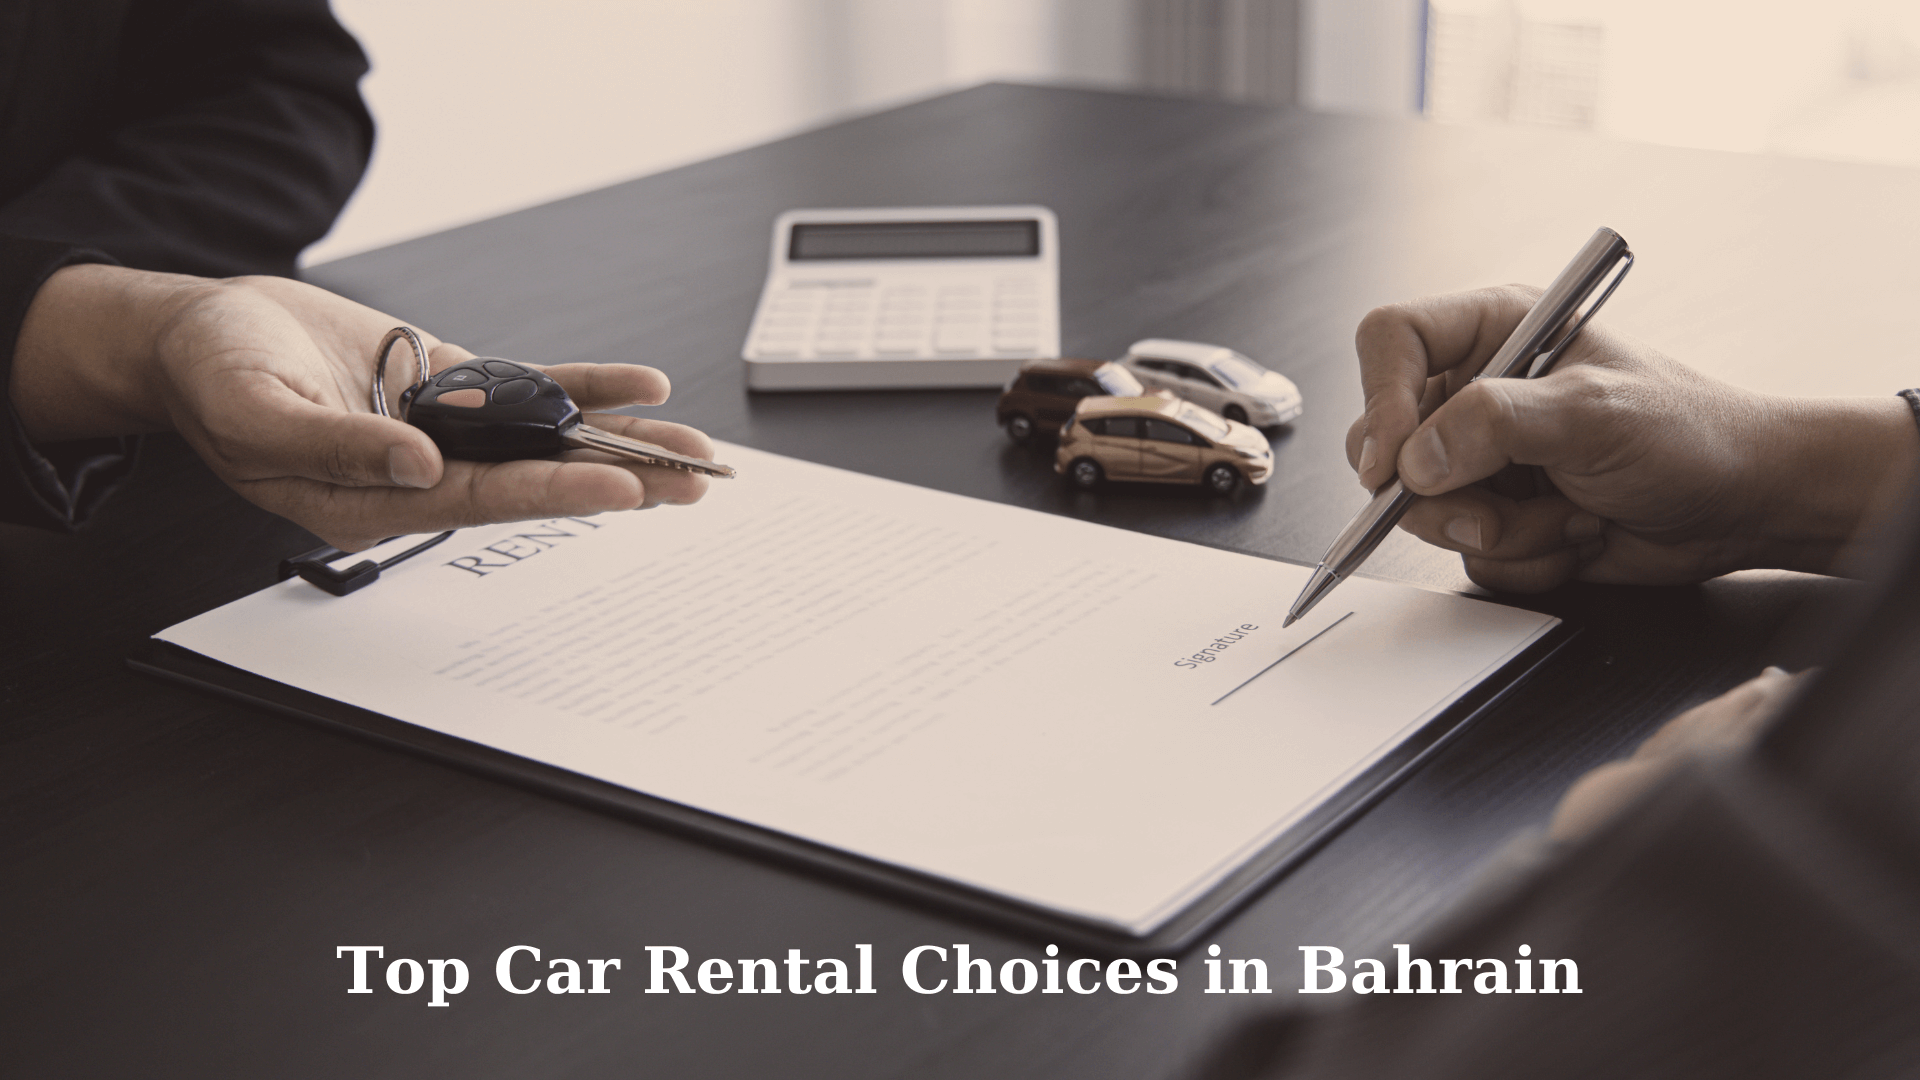 The 12 Reasonable Car Rentals in Bahrain